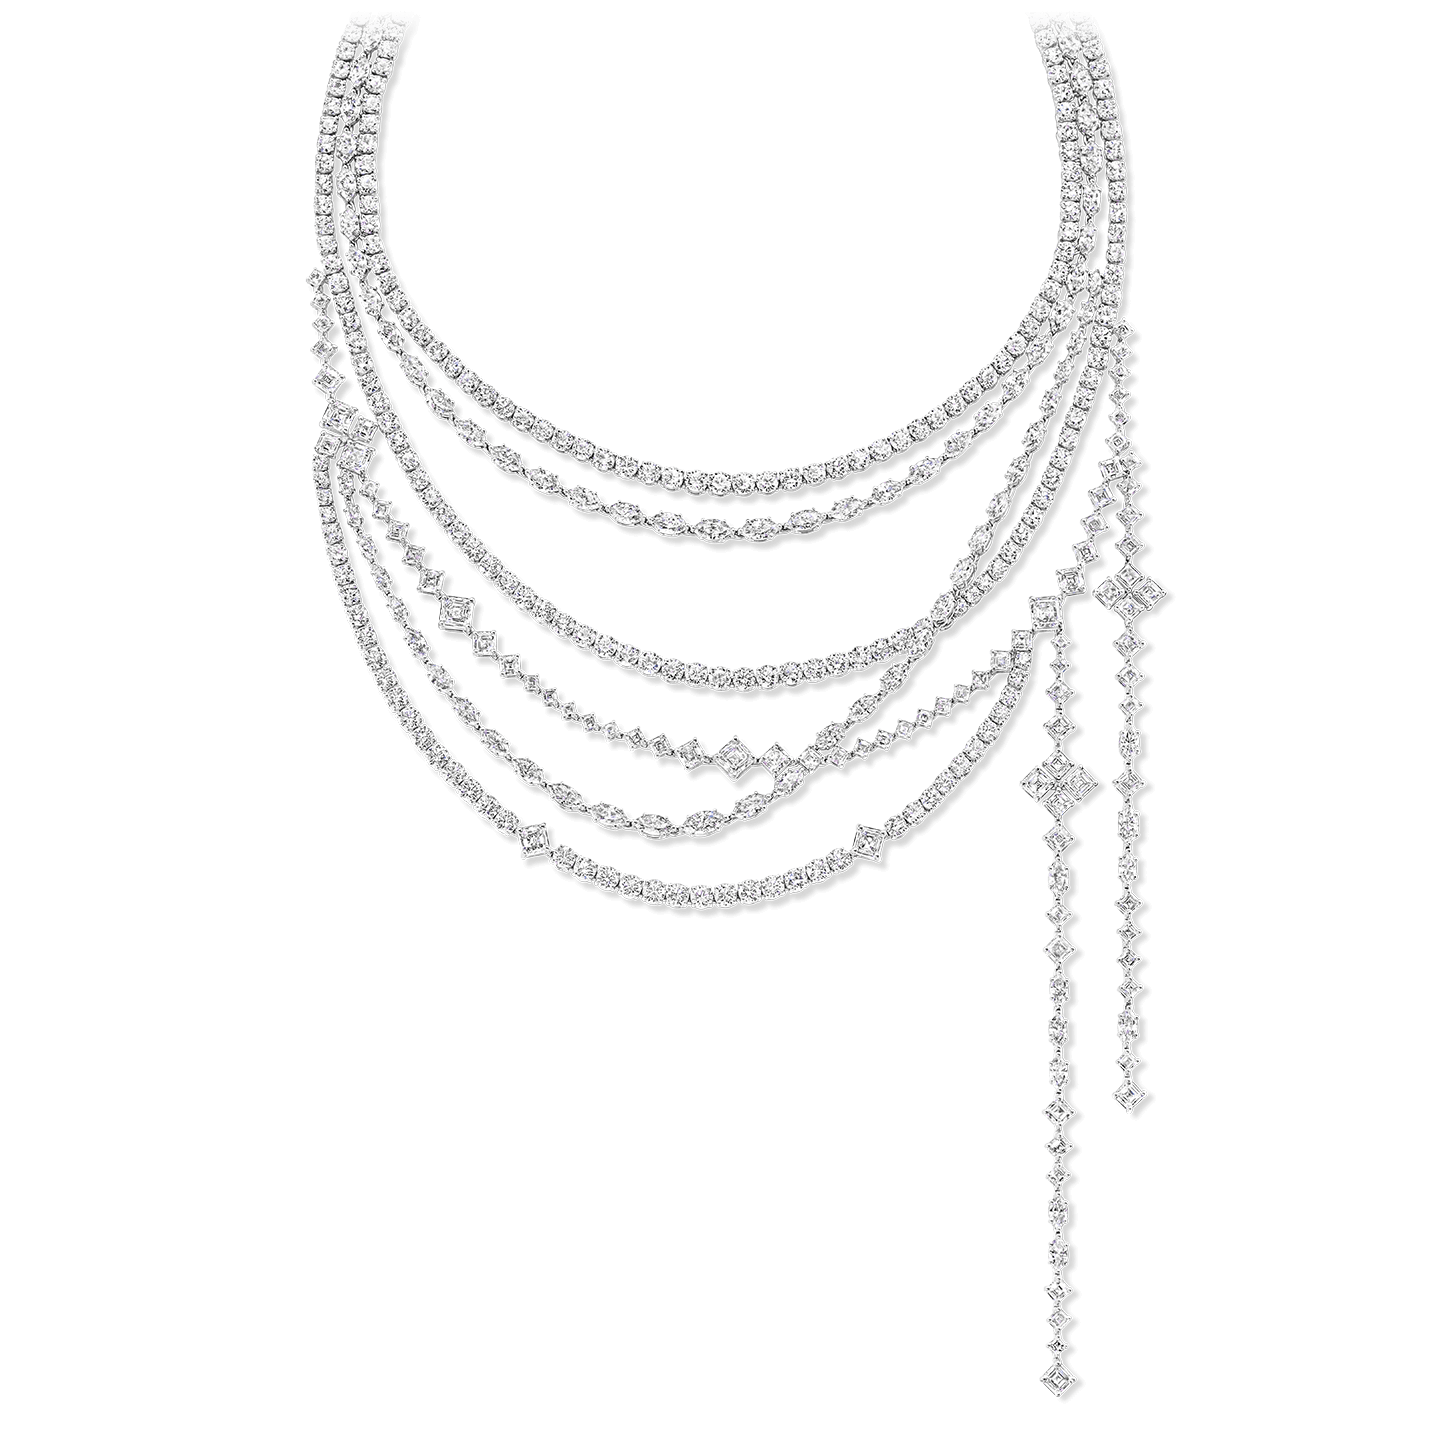 HARRY WINSTON with Love From Harrry Winston Diamond Necklace Platinum White  Gold | eBay